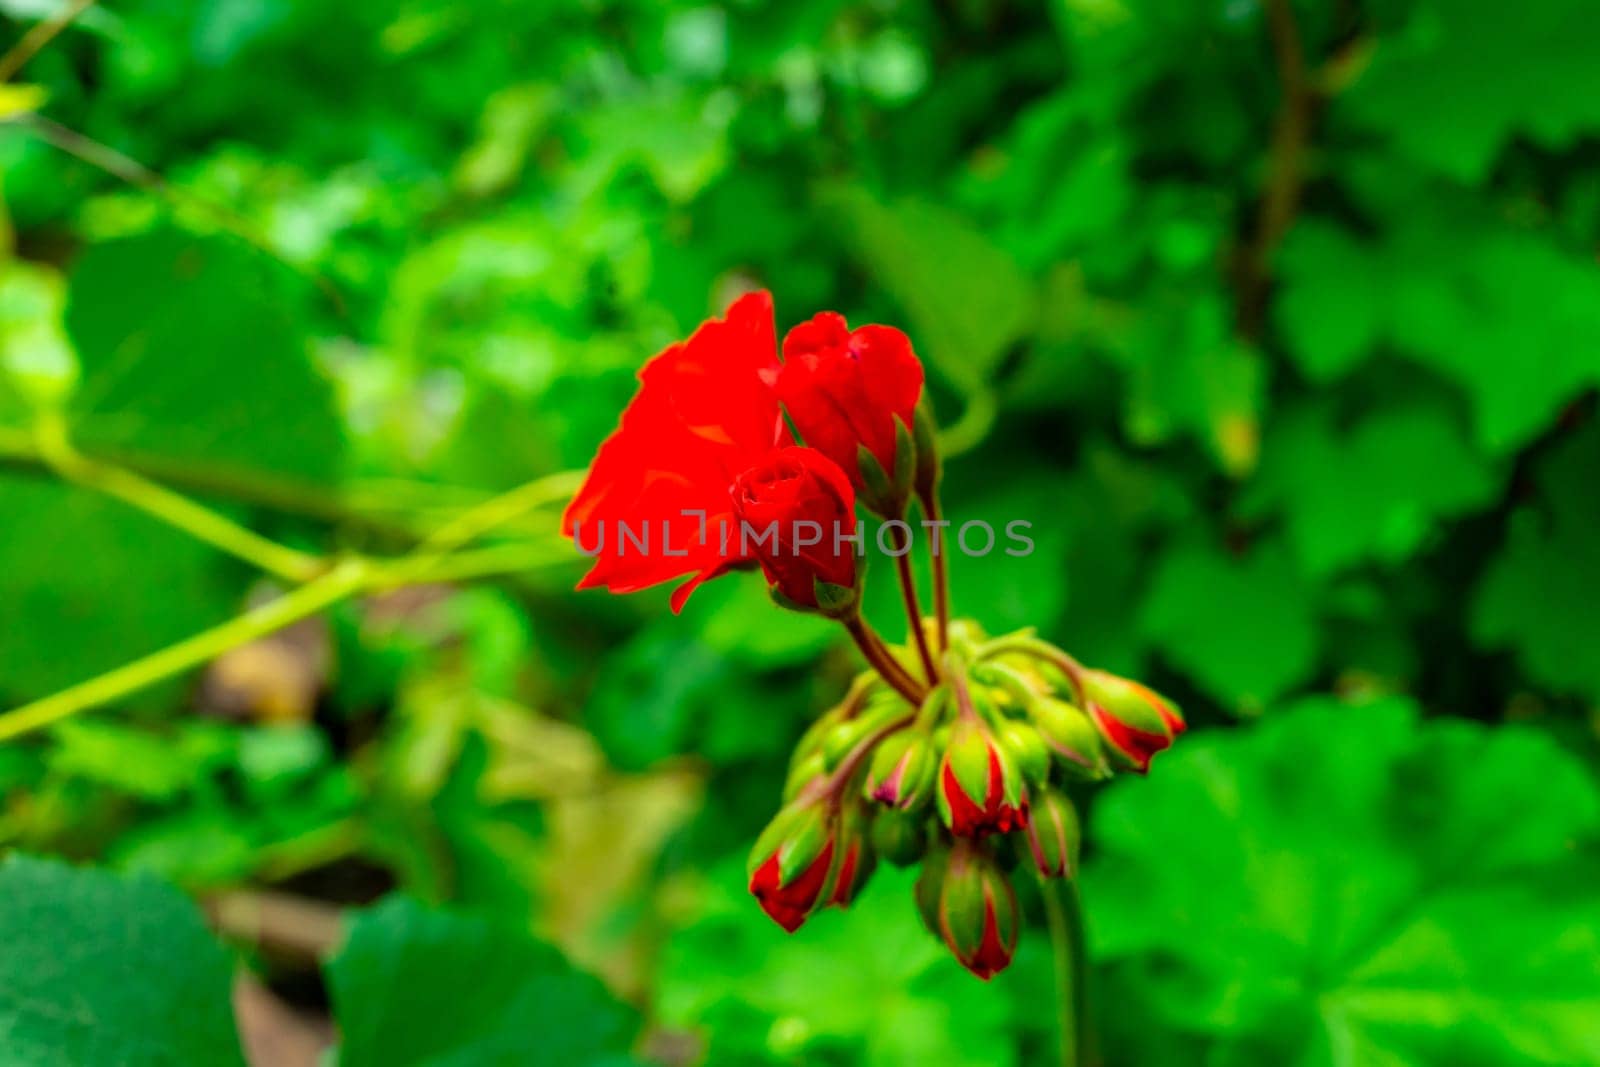 Red geranium flowers on green blurred background.